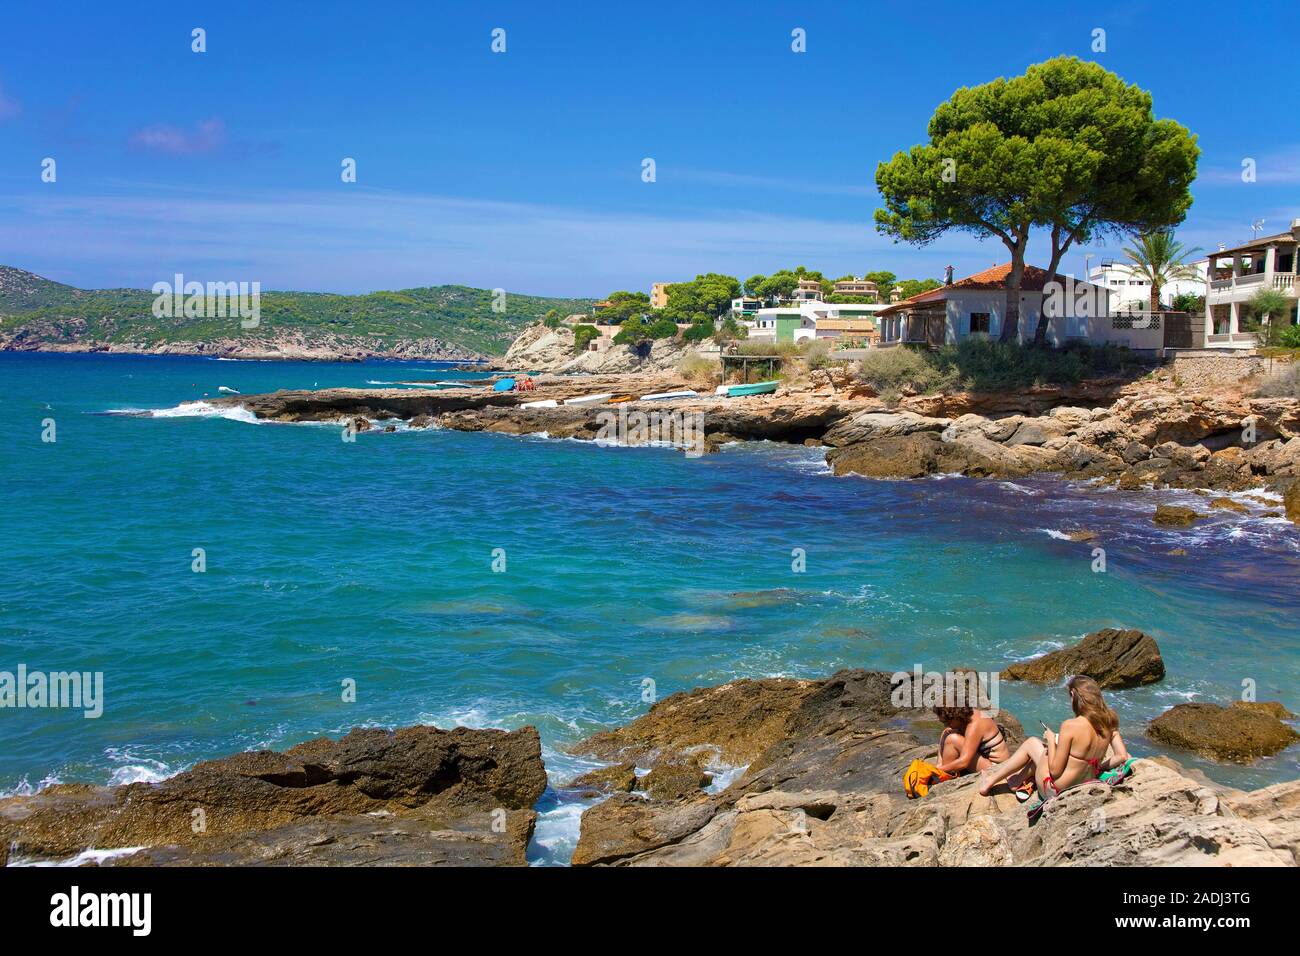 La gente en la playa rocosa, San Telmo, Mallorca, Islas Baleares, España Foto de stock